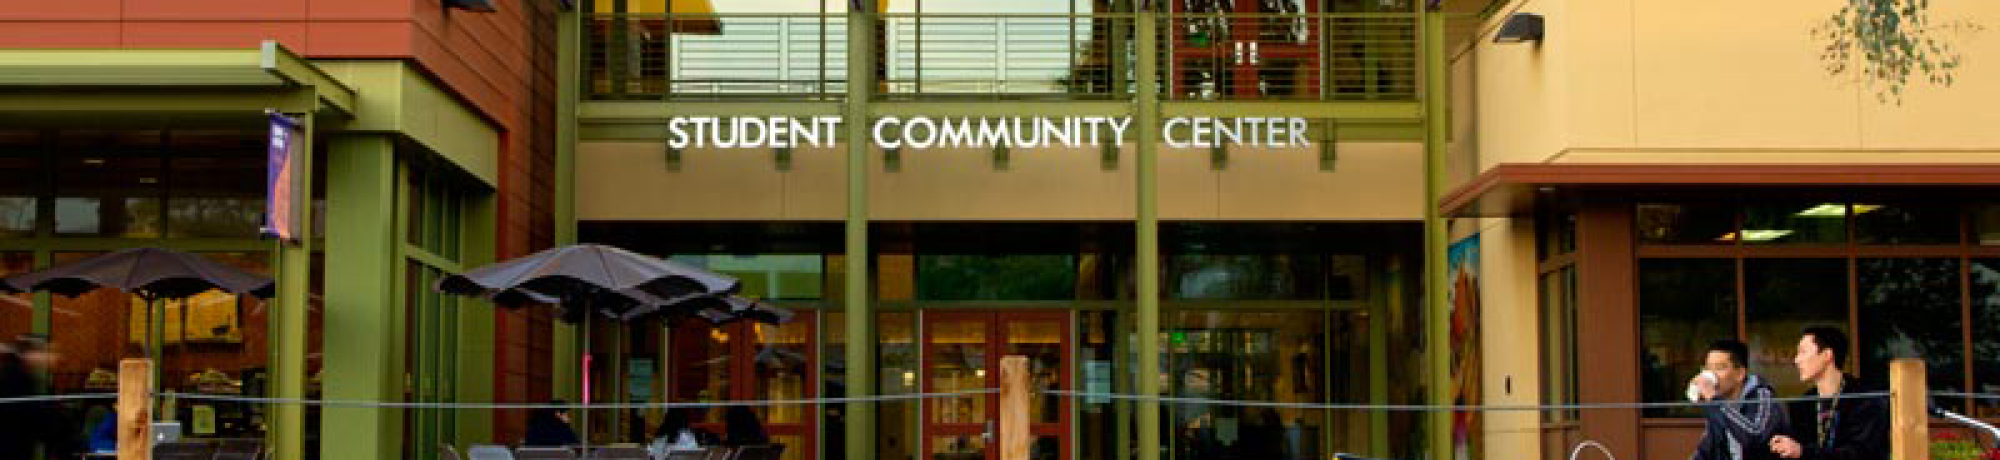 Entrance to UC Davis Student Community Center